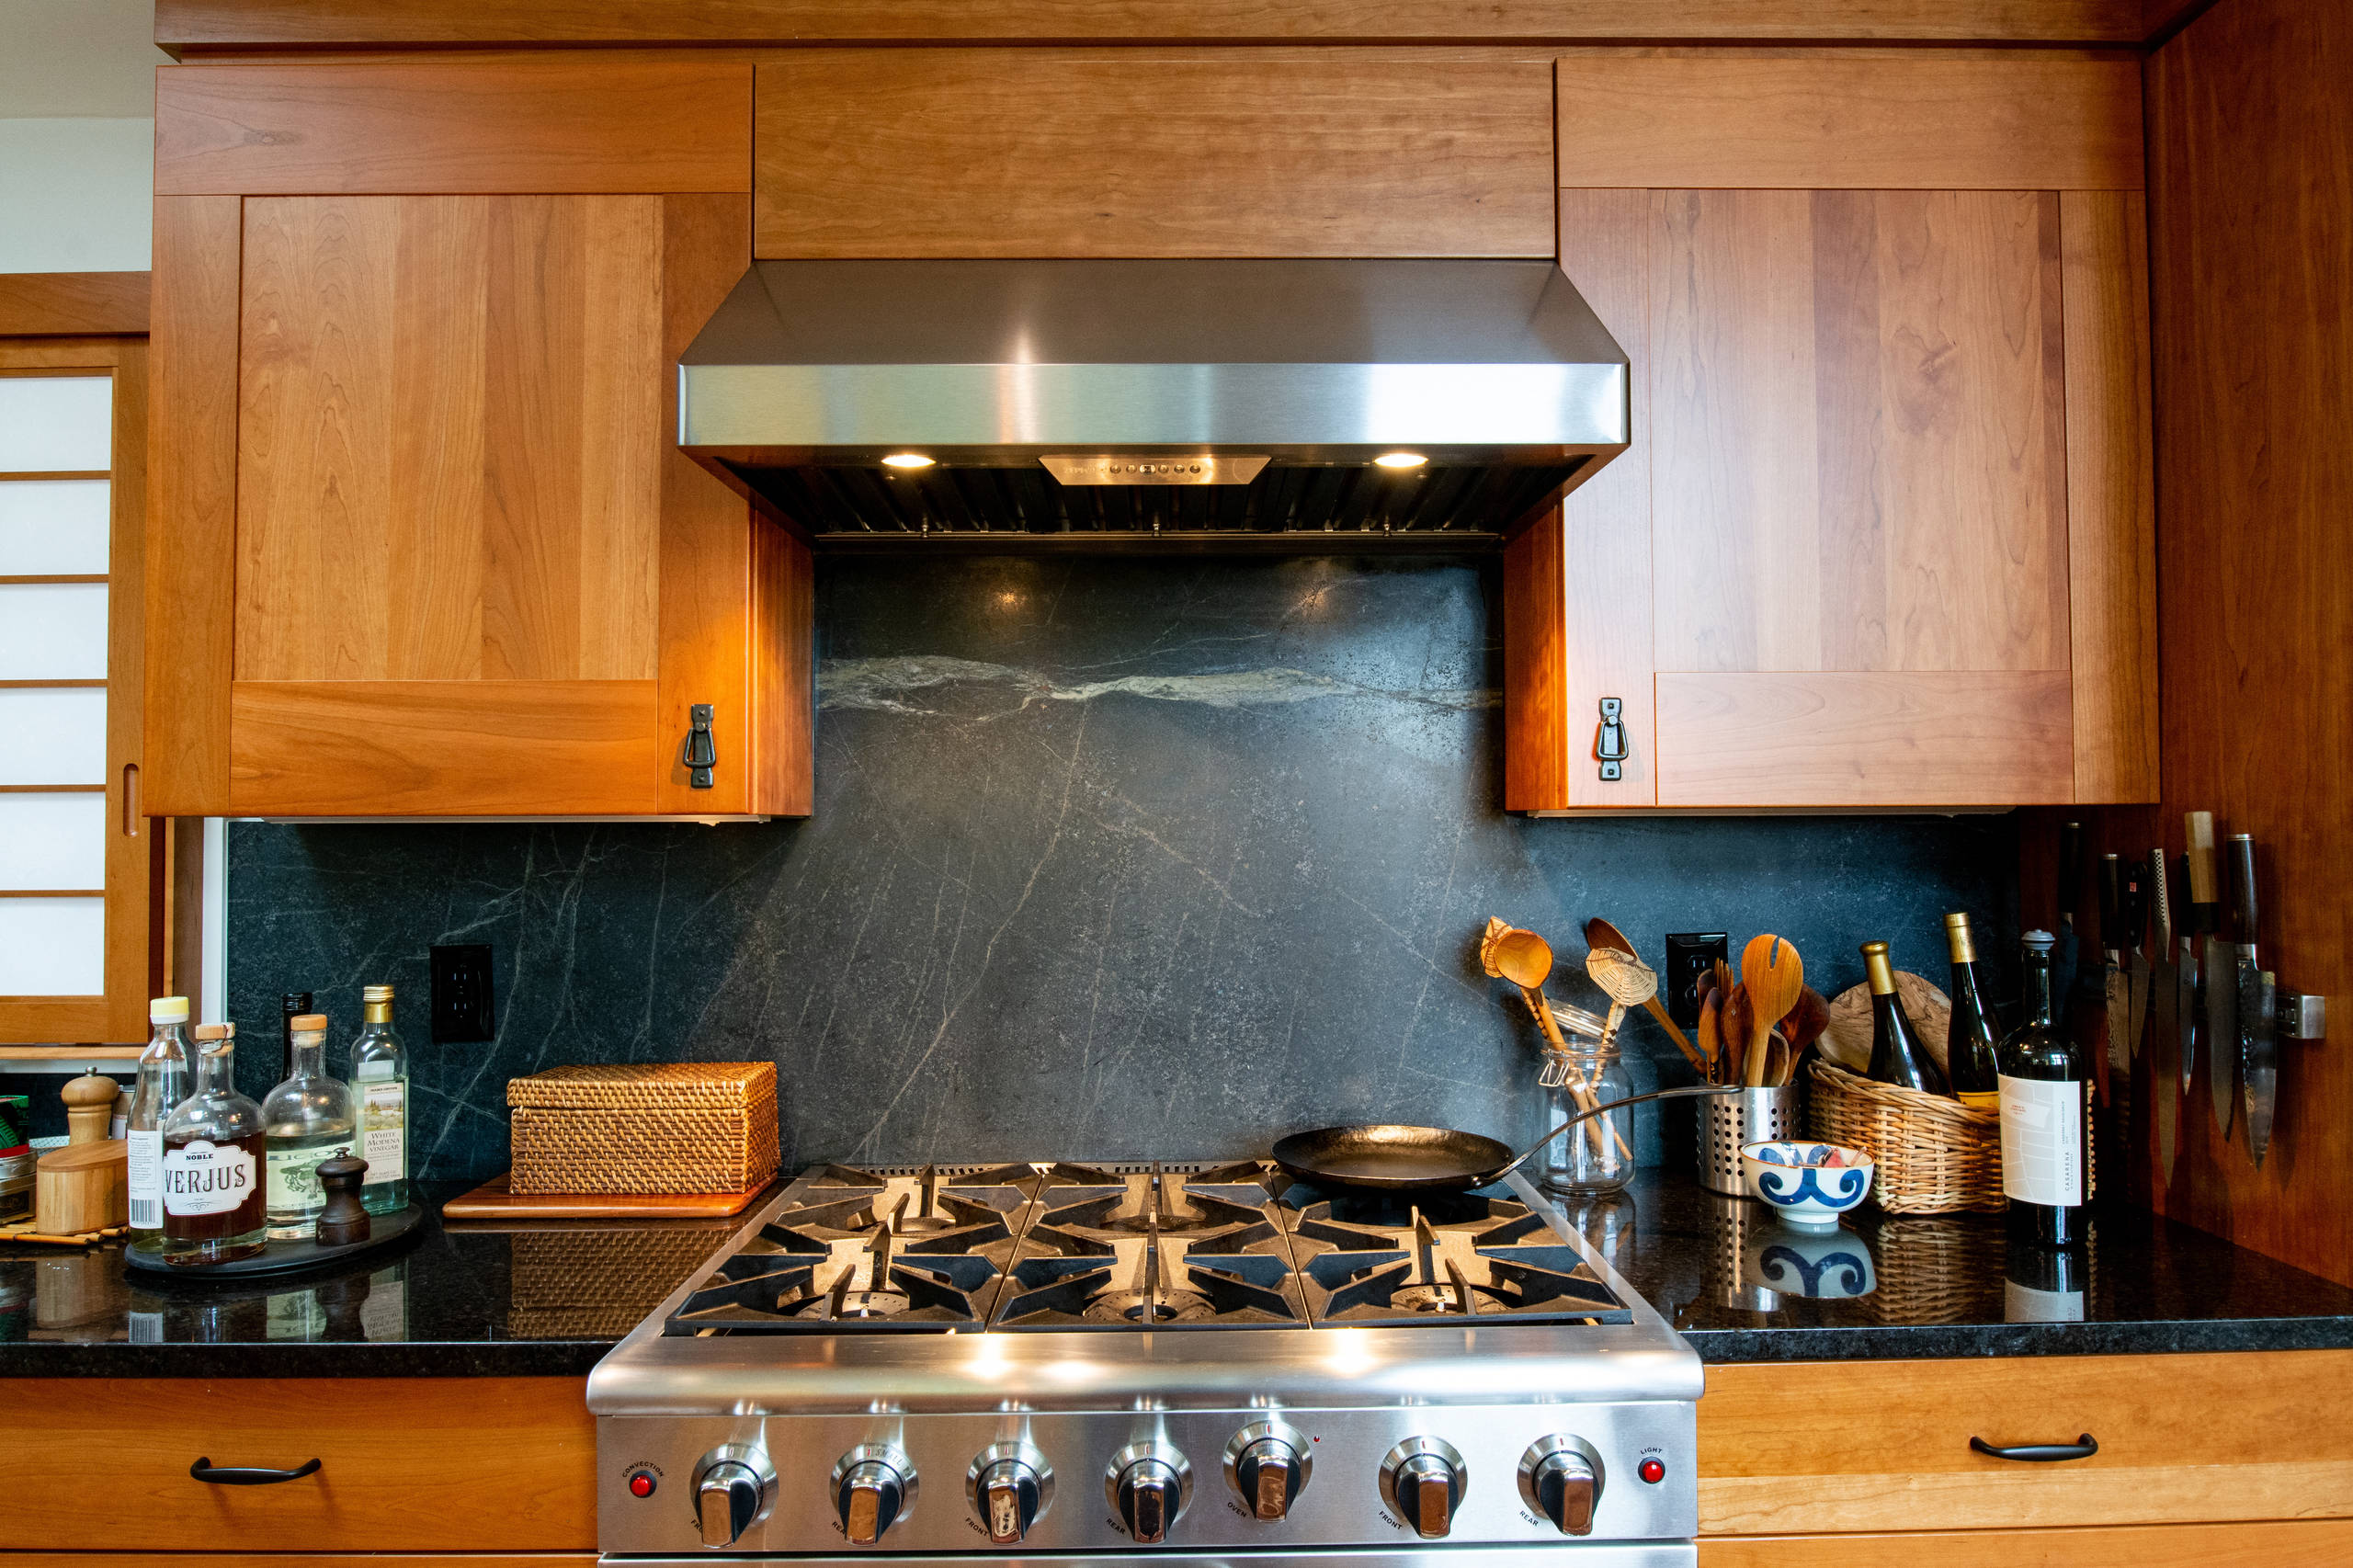 Backsplash Ideas - full height granite backsplash behind cooktop